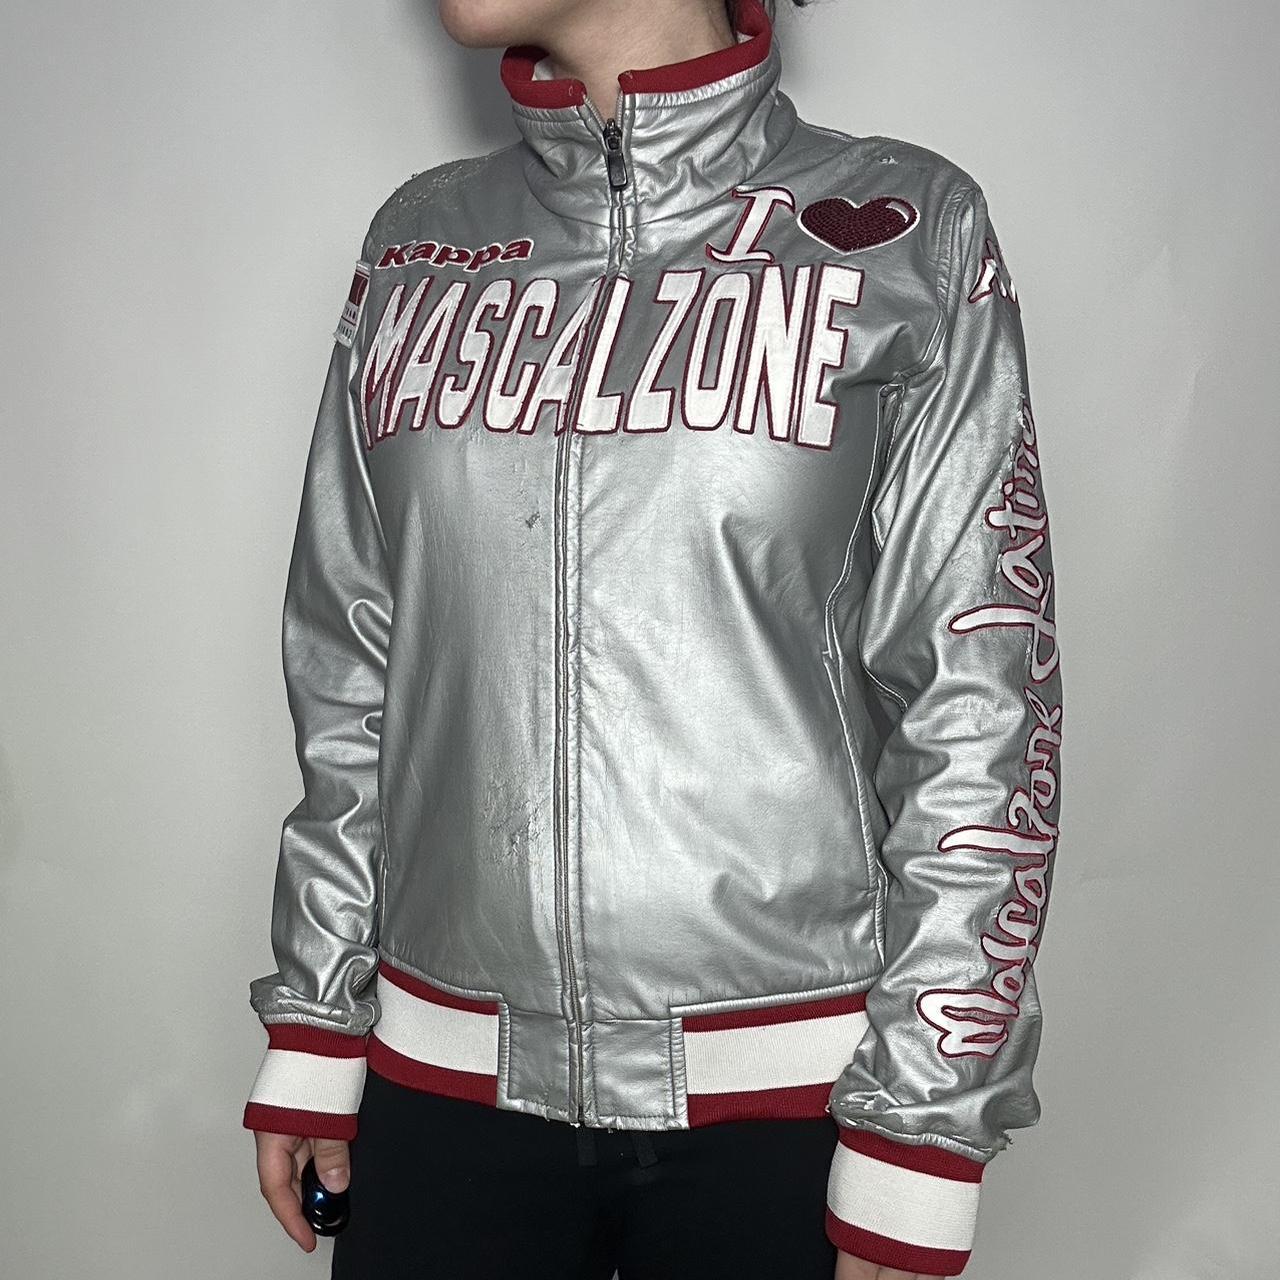 Vintage Y2k silver faux leather bomber racer jacket